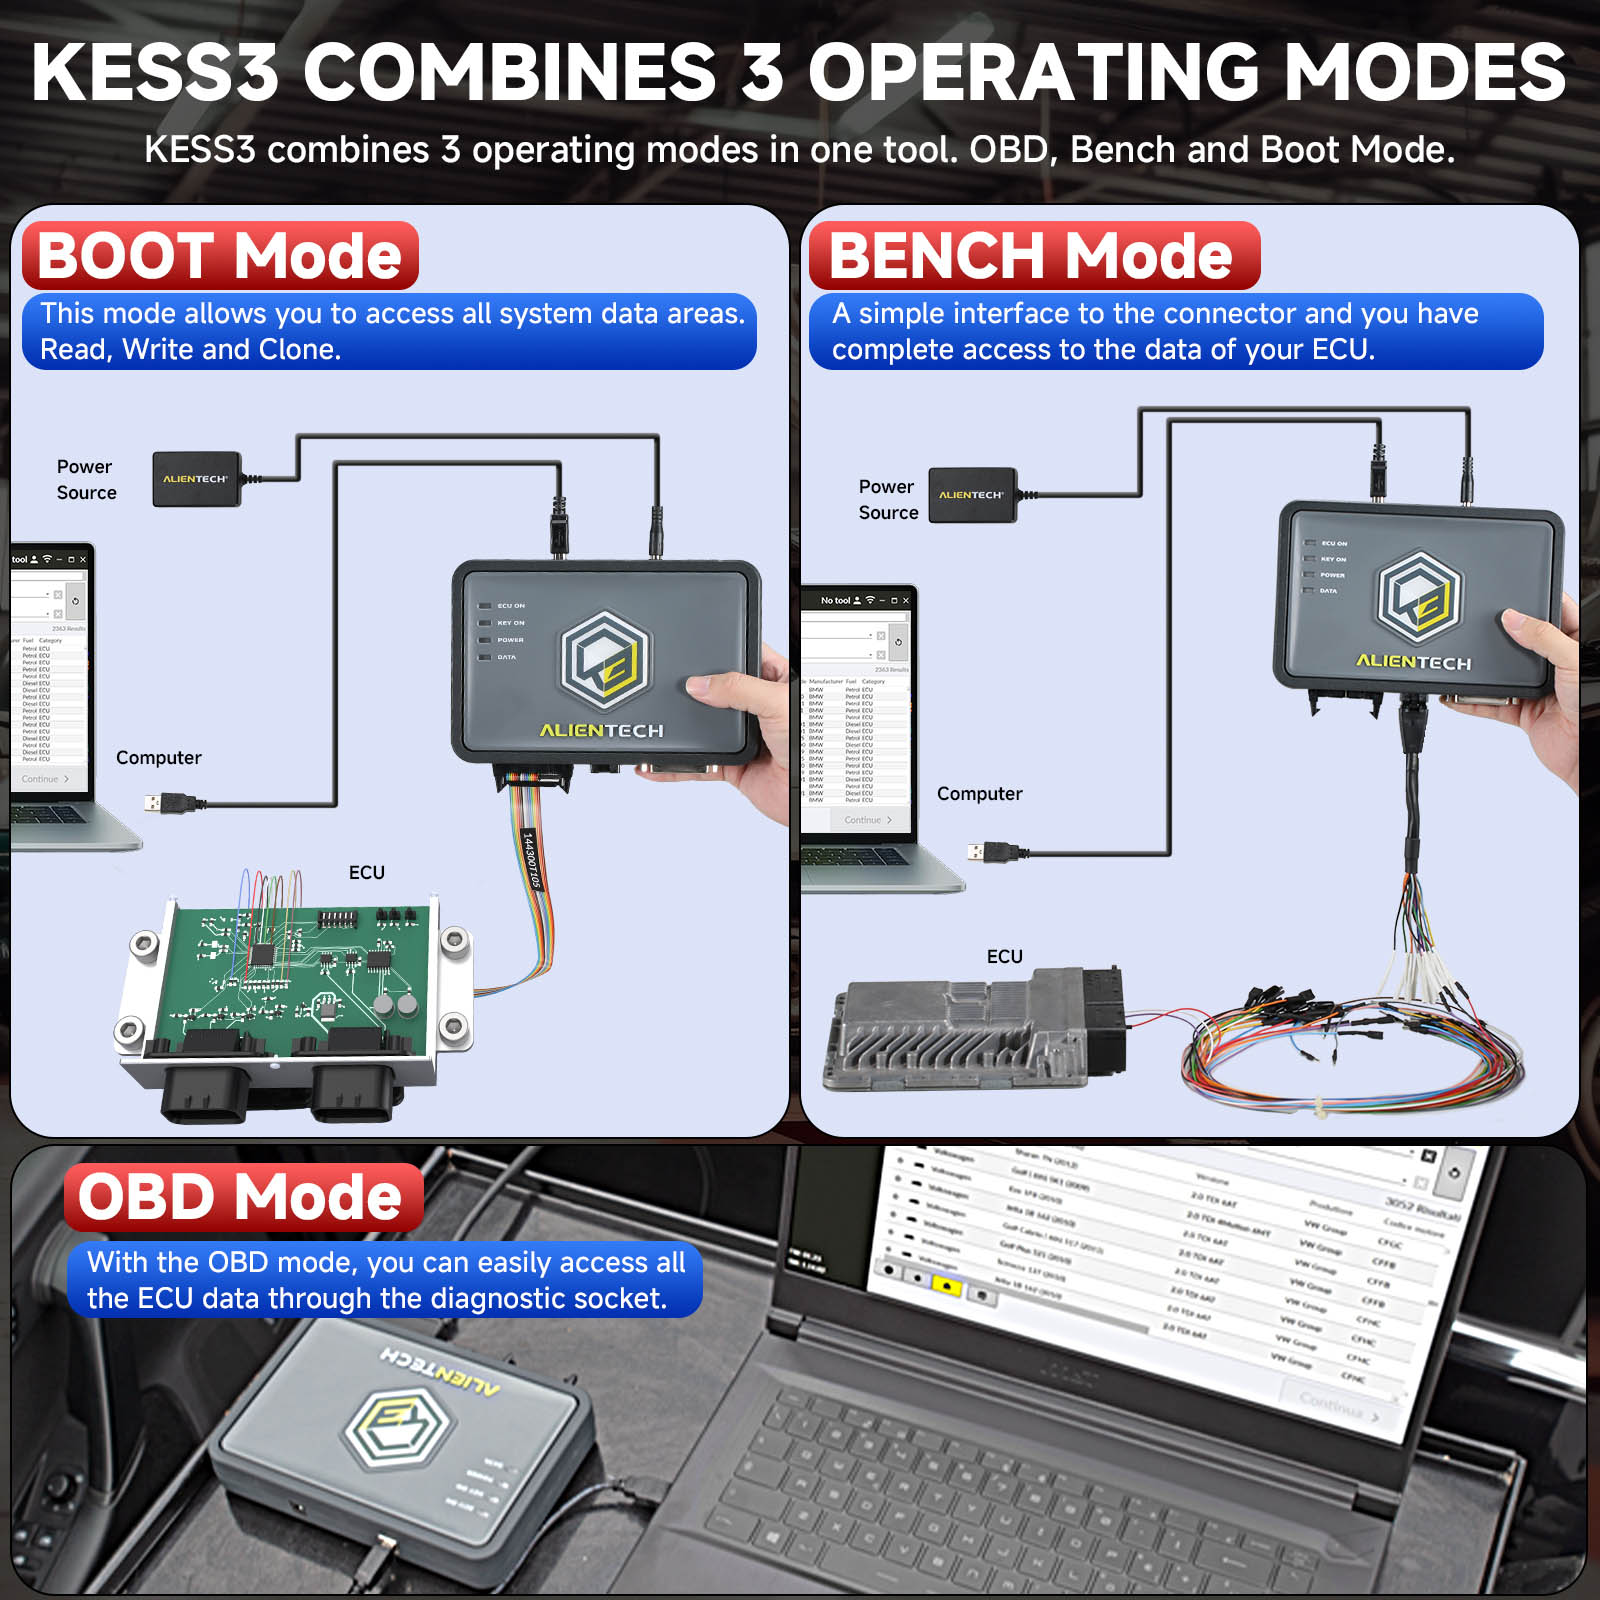 Alientech KESS V3 Master Version ECU Programmer Multi-language Free Shipping